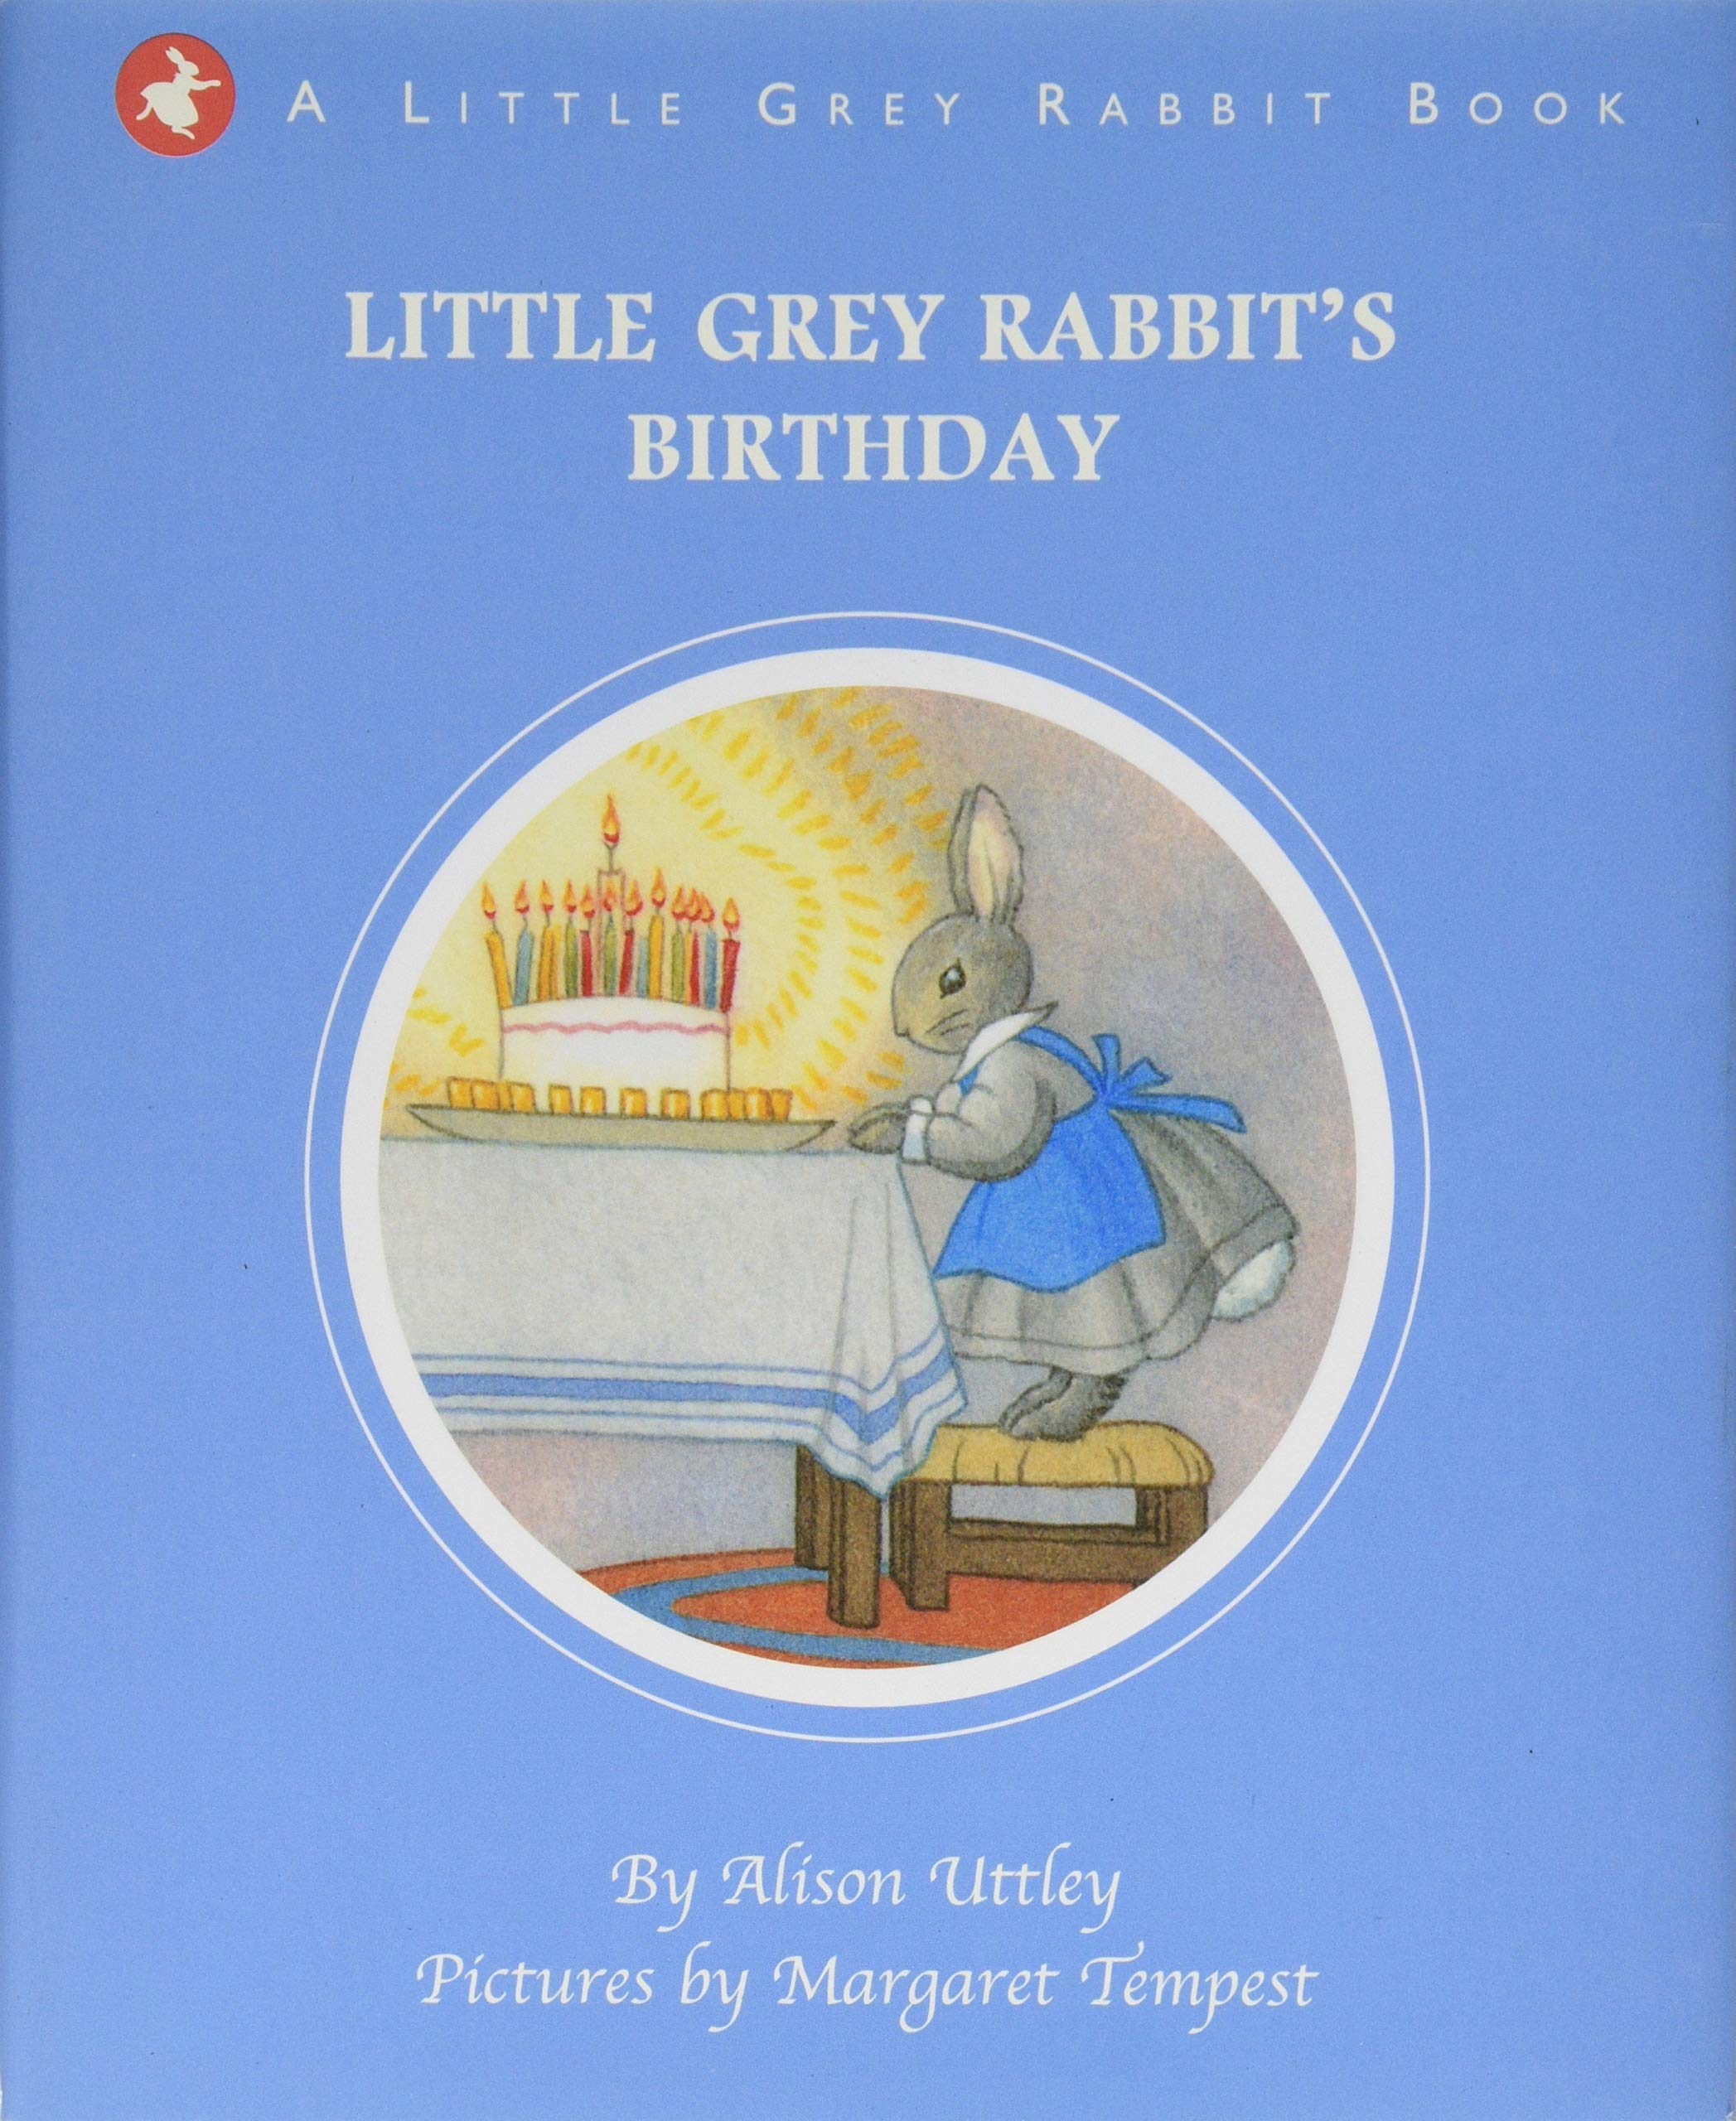 Little Grey Rabbit's birthday